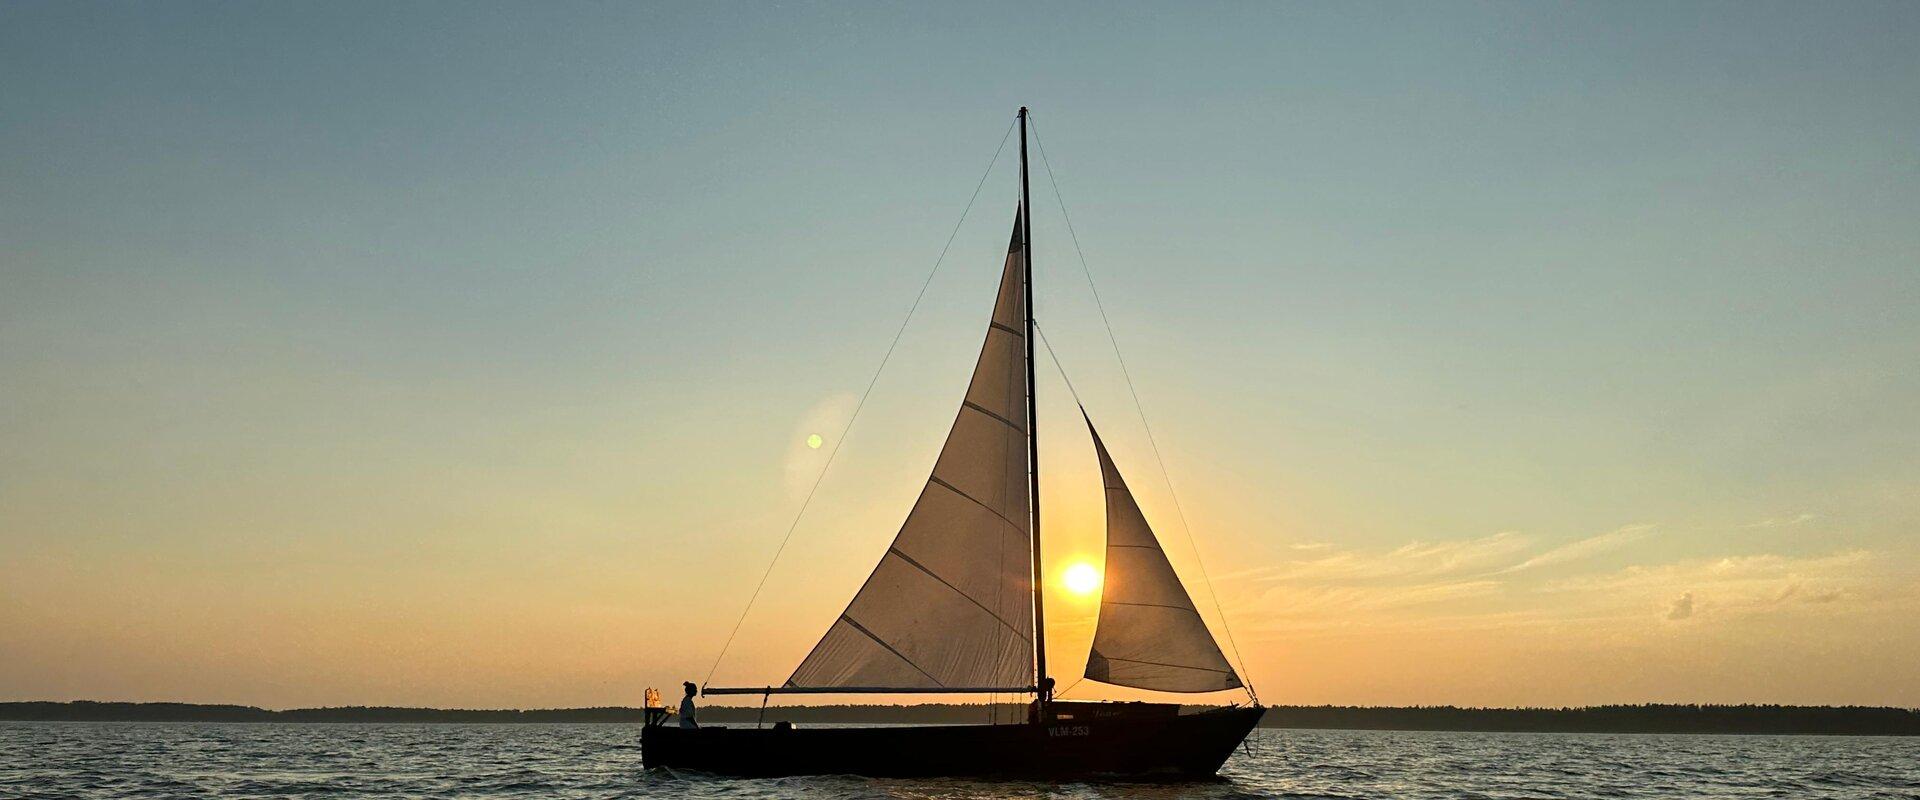 'Liisu' sailboat